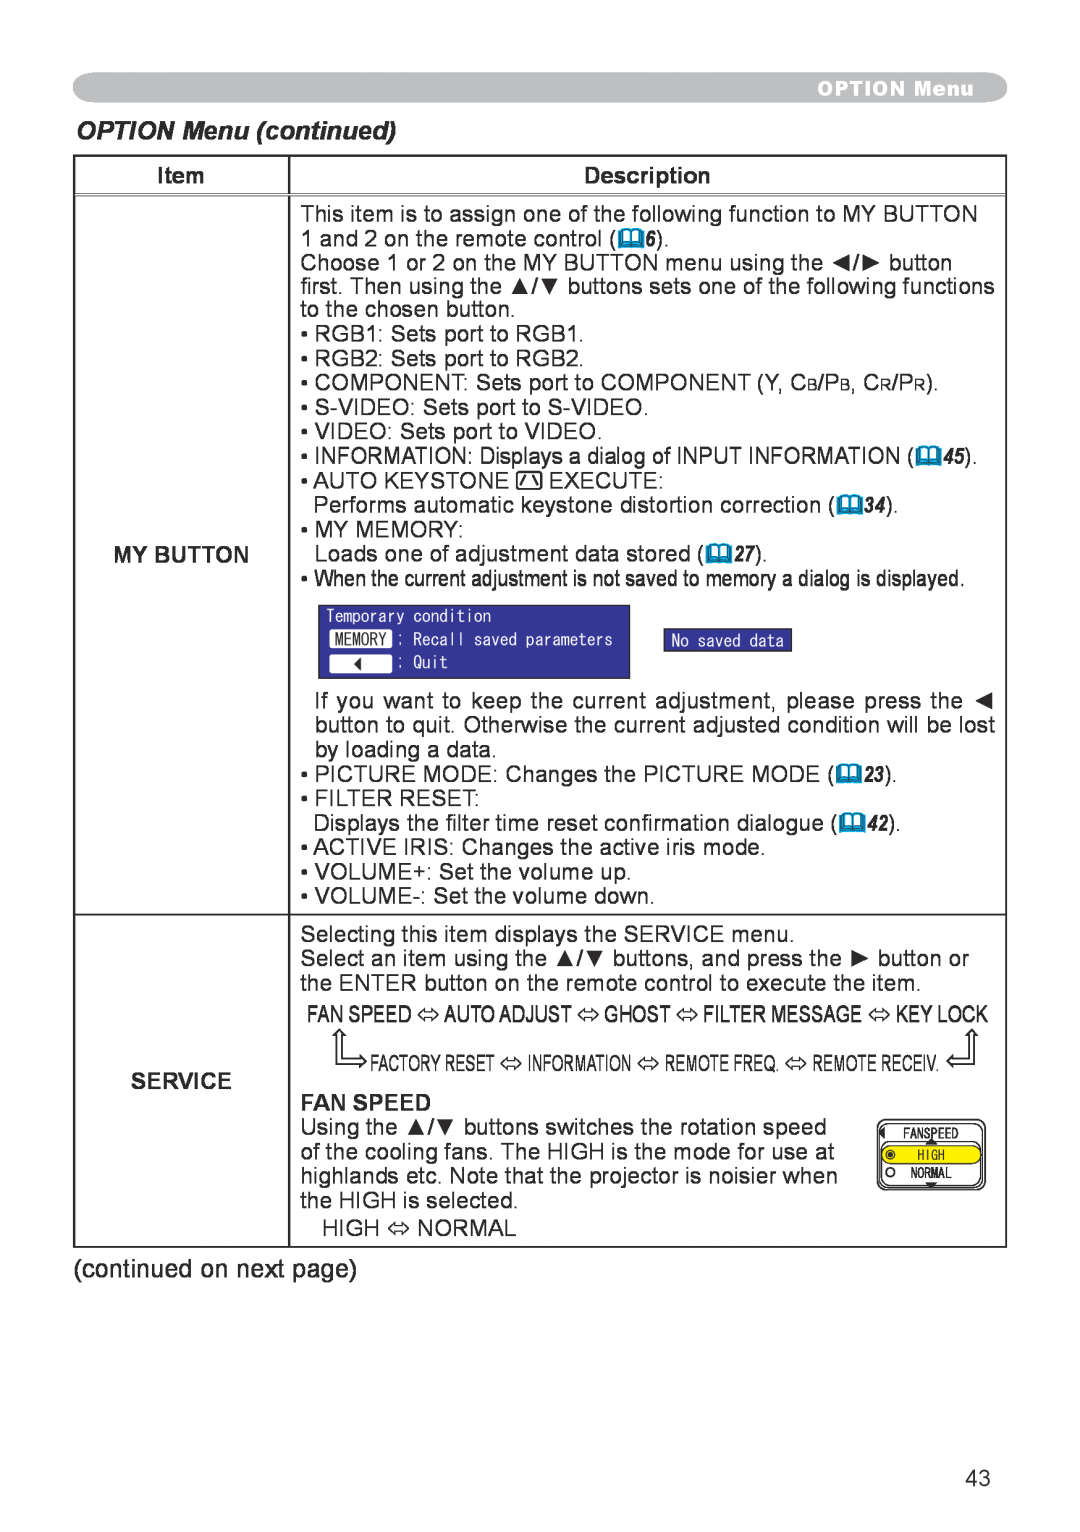 Hitachi CP-X600 user manual OPTION Menu continued, Description, My Button, Service, Fan Speed 